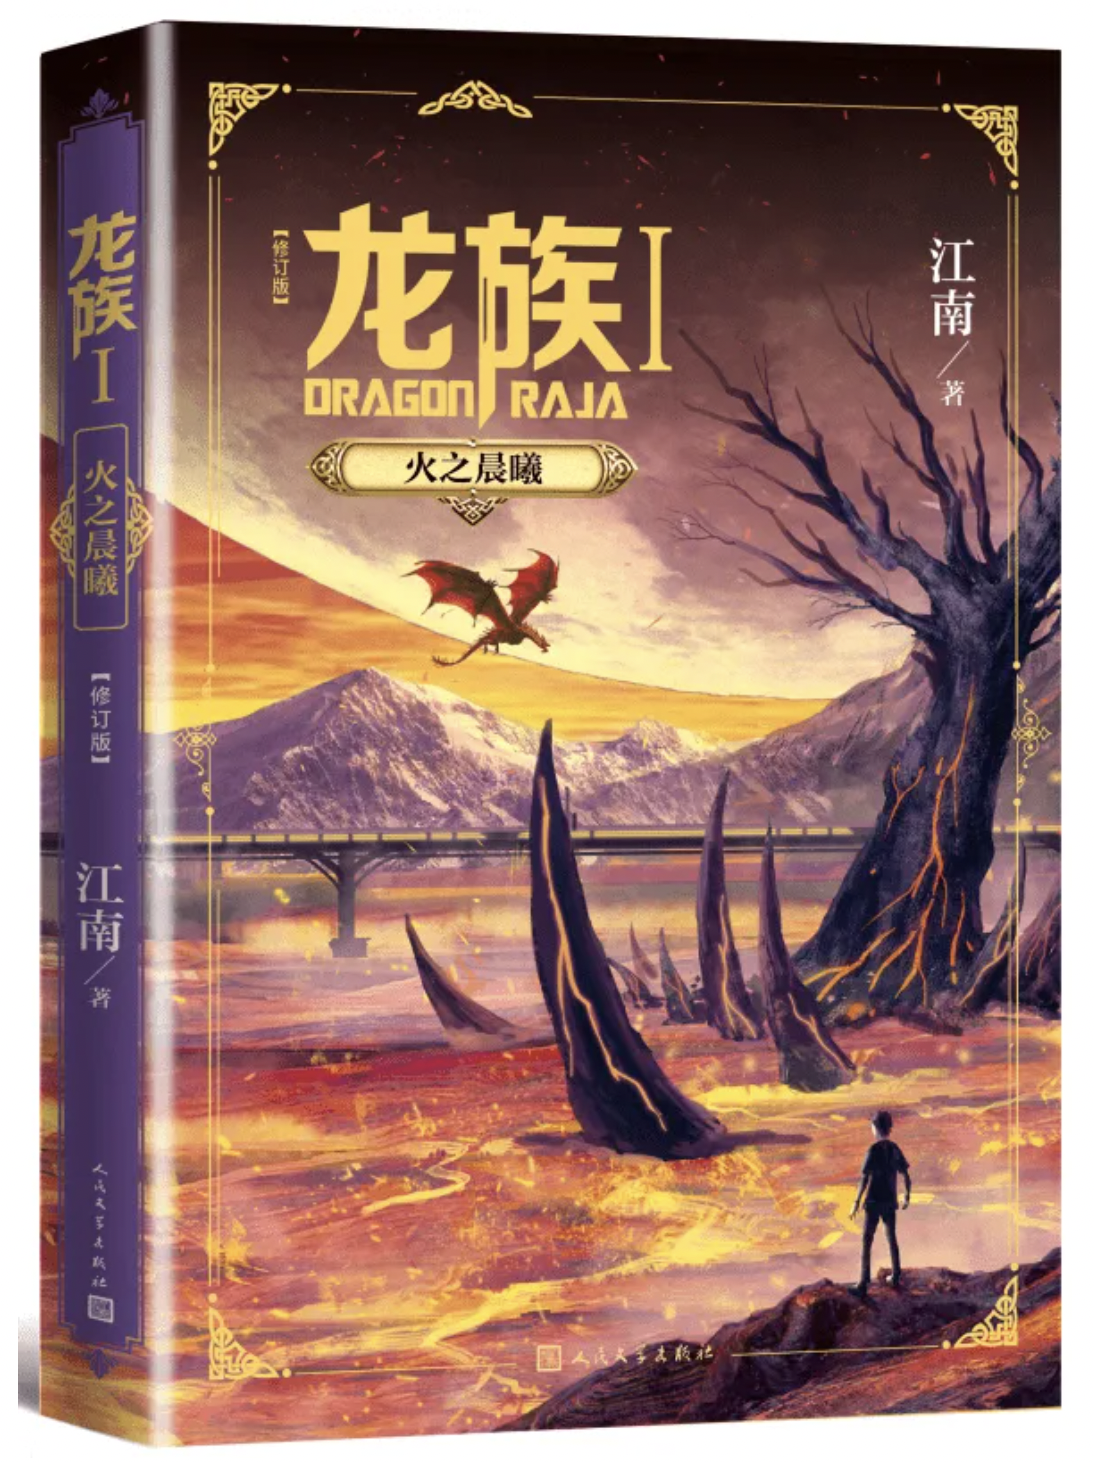 Good old lackey-zoned Luminous Dragon Raja - Chapters 6 & 7 (Summarized  translation). : r/DragonRajaMobile